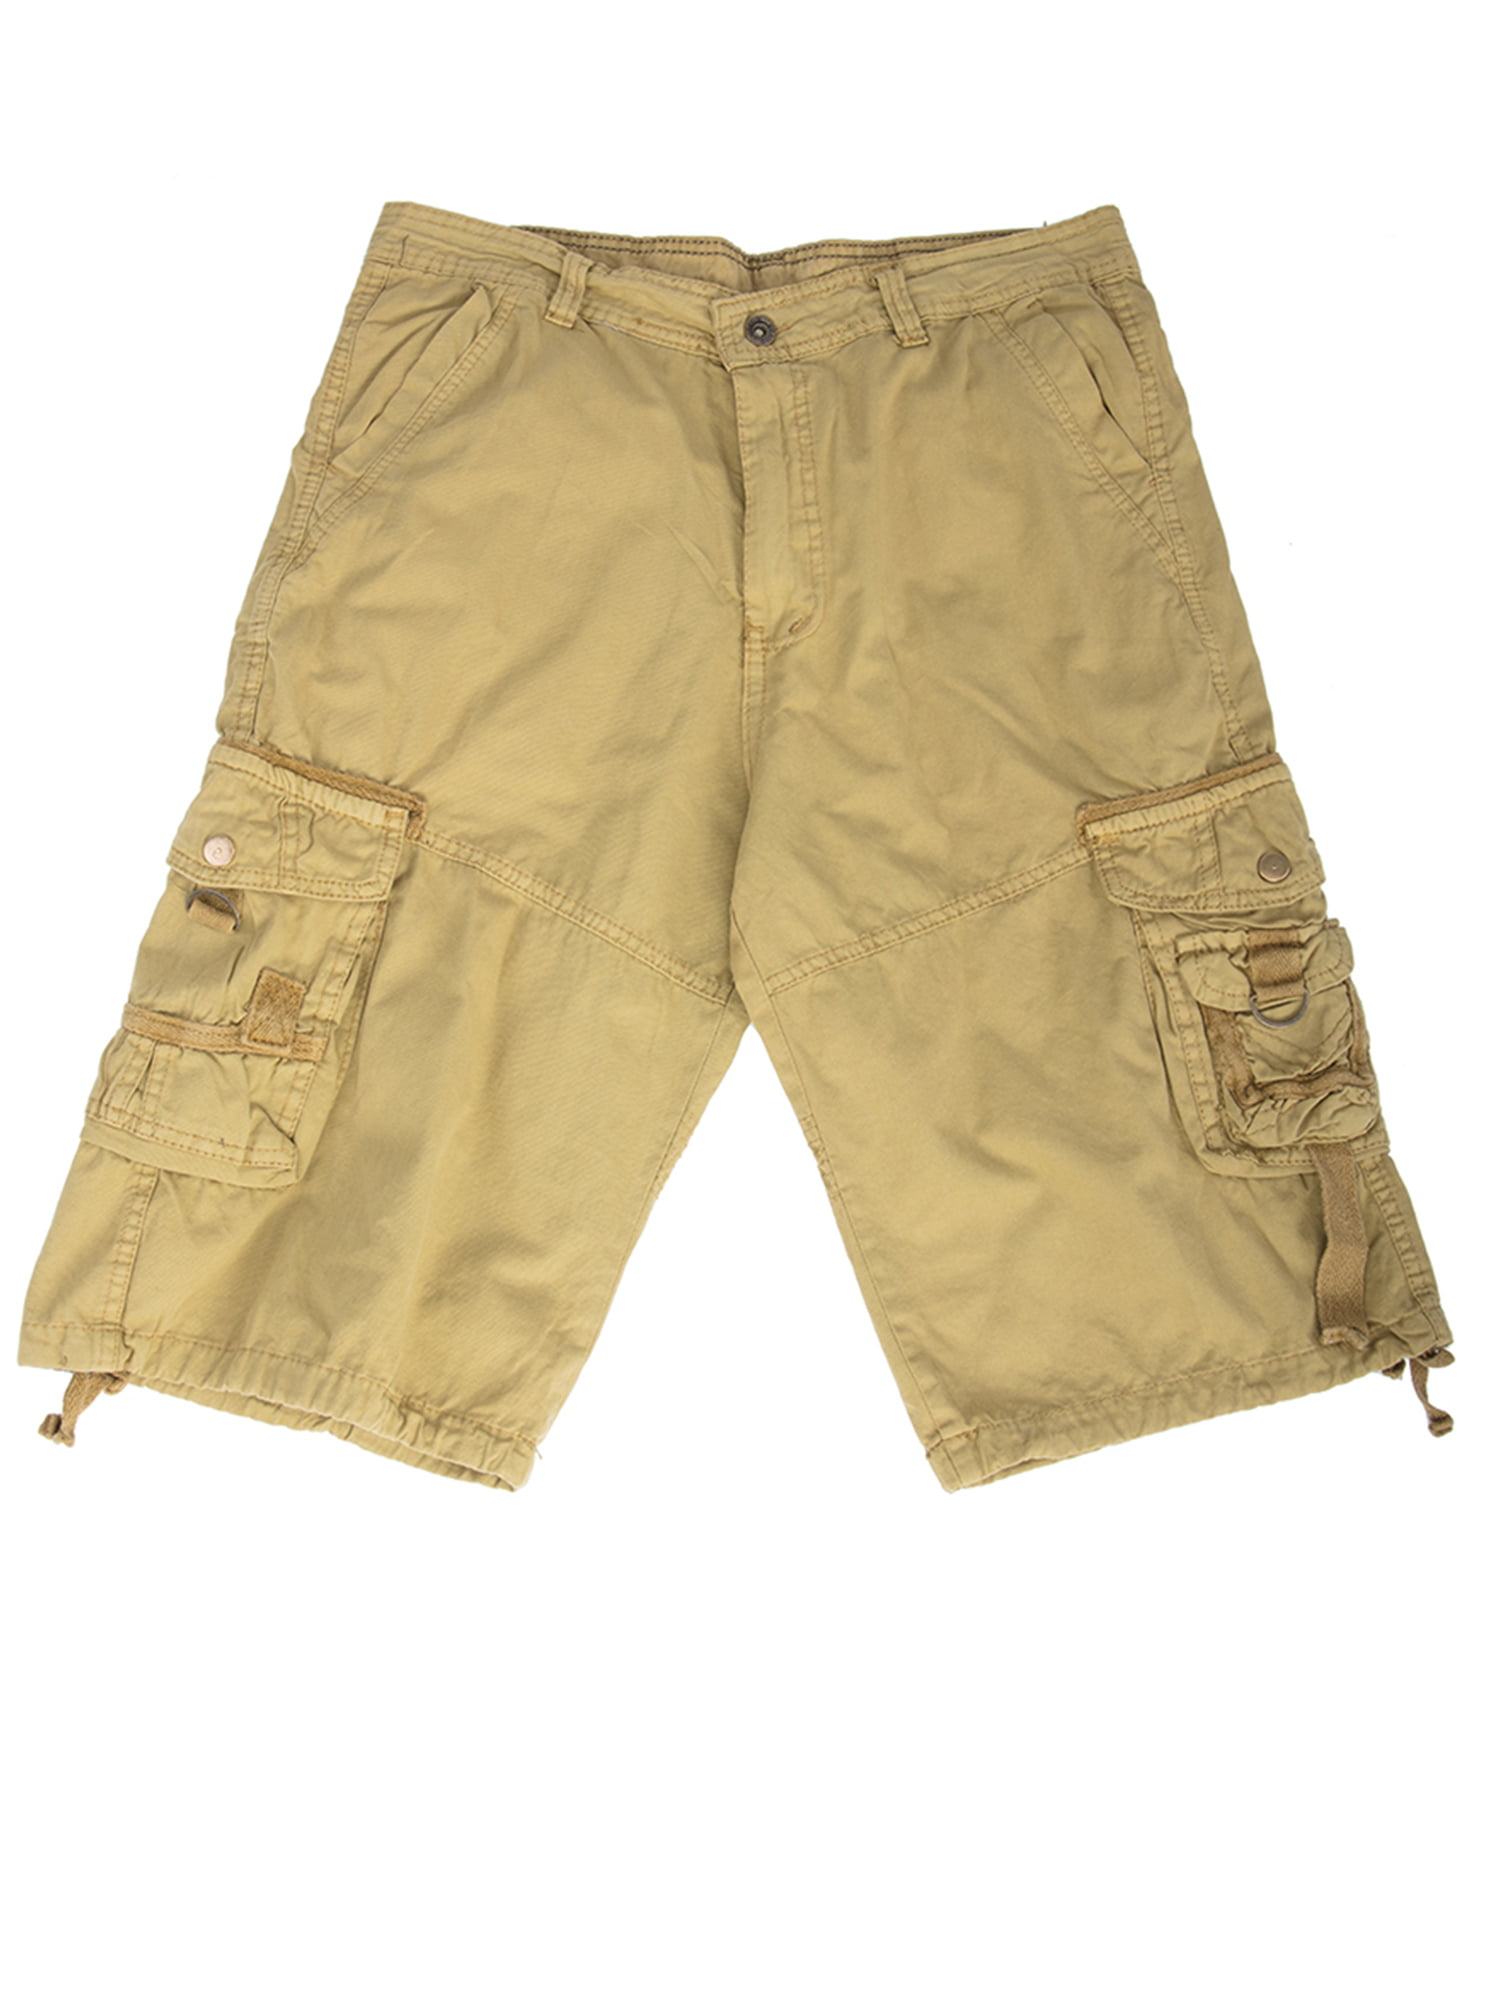 SAYFUT Men's Vintage Paratrooper Style Cotton Cargo Short Pockets Baggy ...